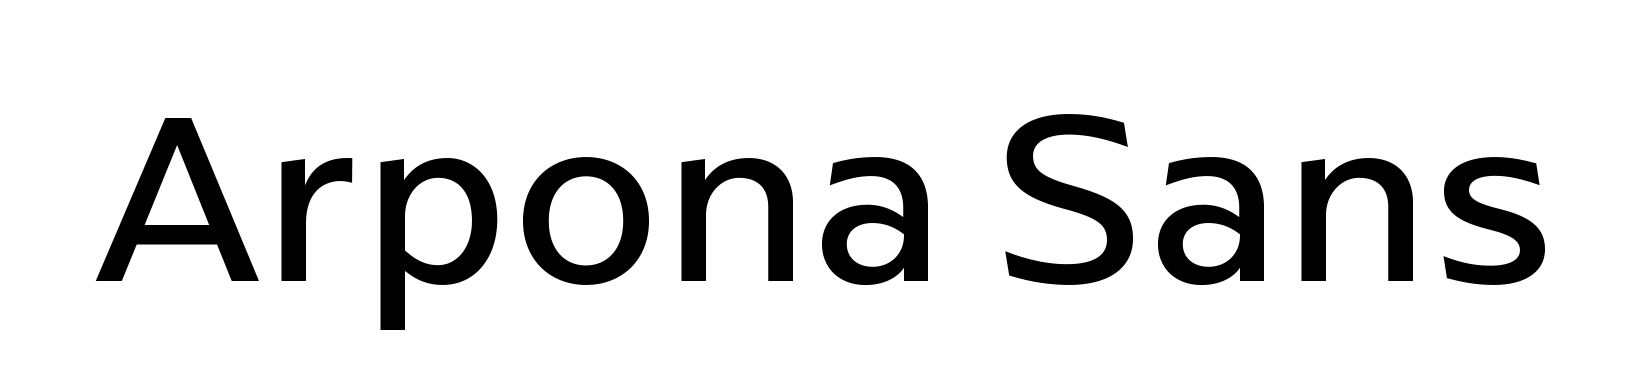 Arpona Sans Typeface